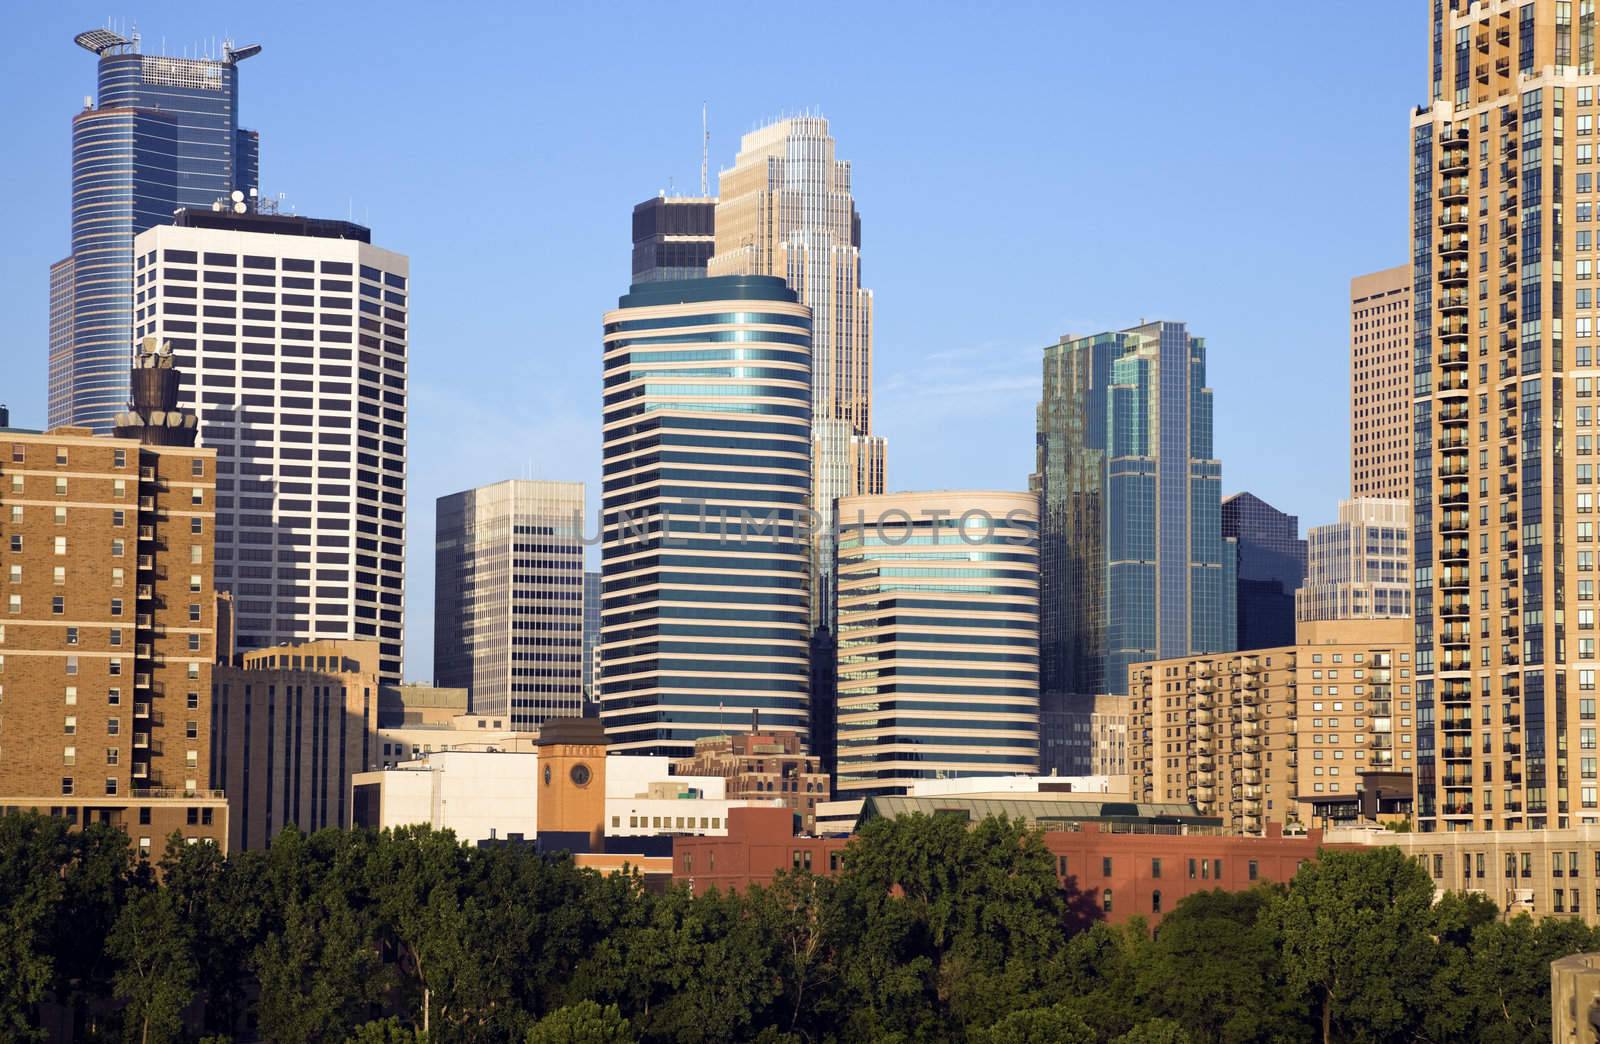 Modern Downtown of Minneapolis, Minnesota.